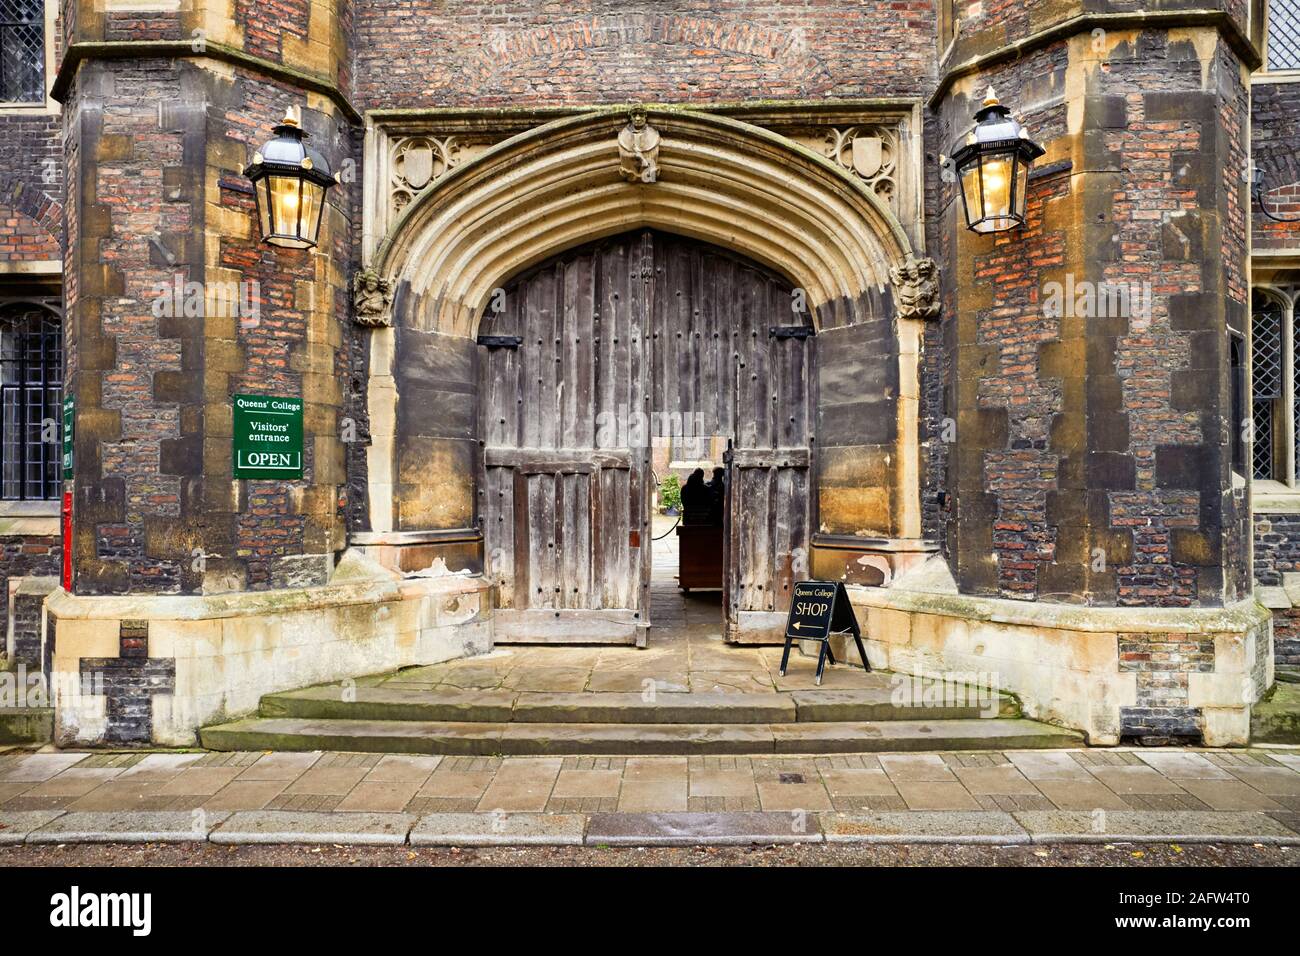 Queen’s College cambridge main entrance gate Stock Photo